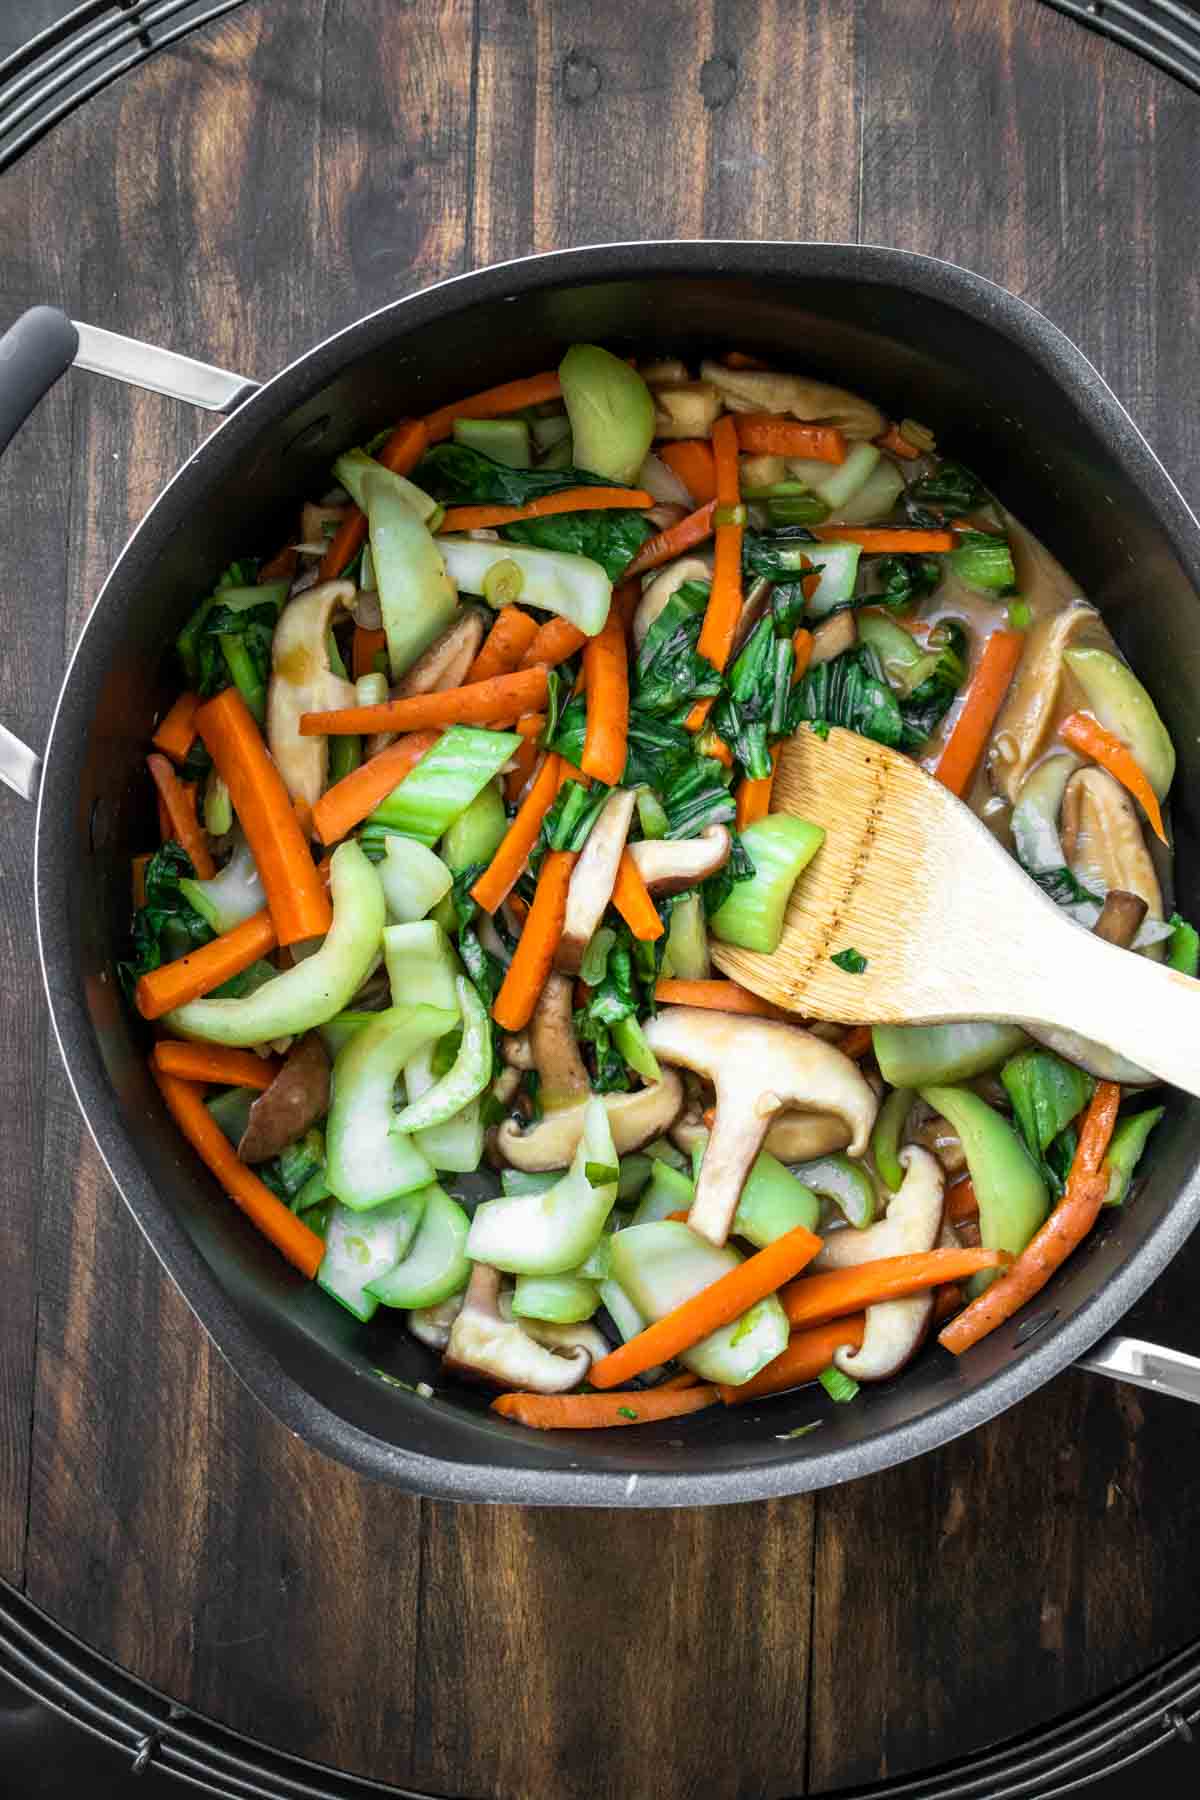 Wooden spoon stirring veggies in a pot